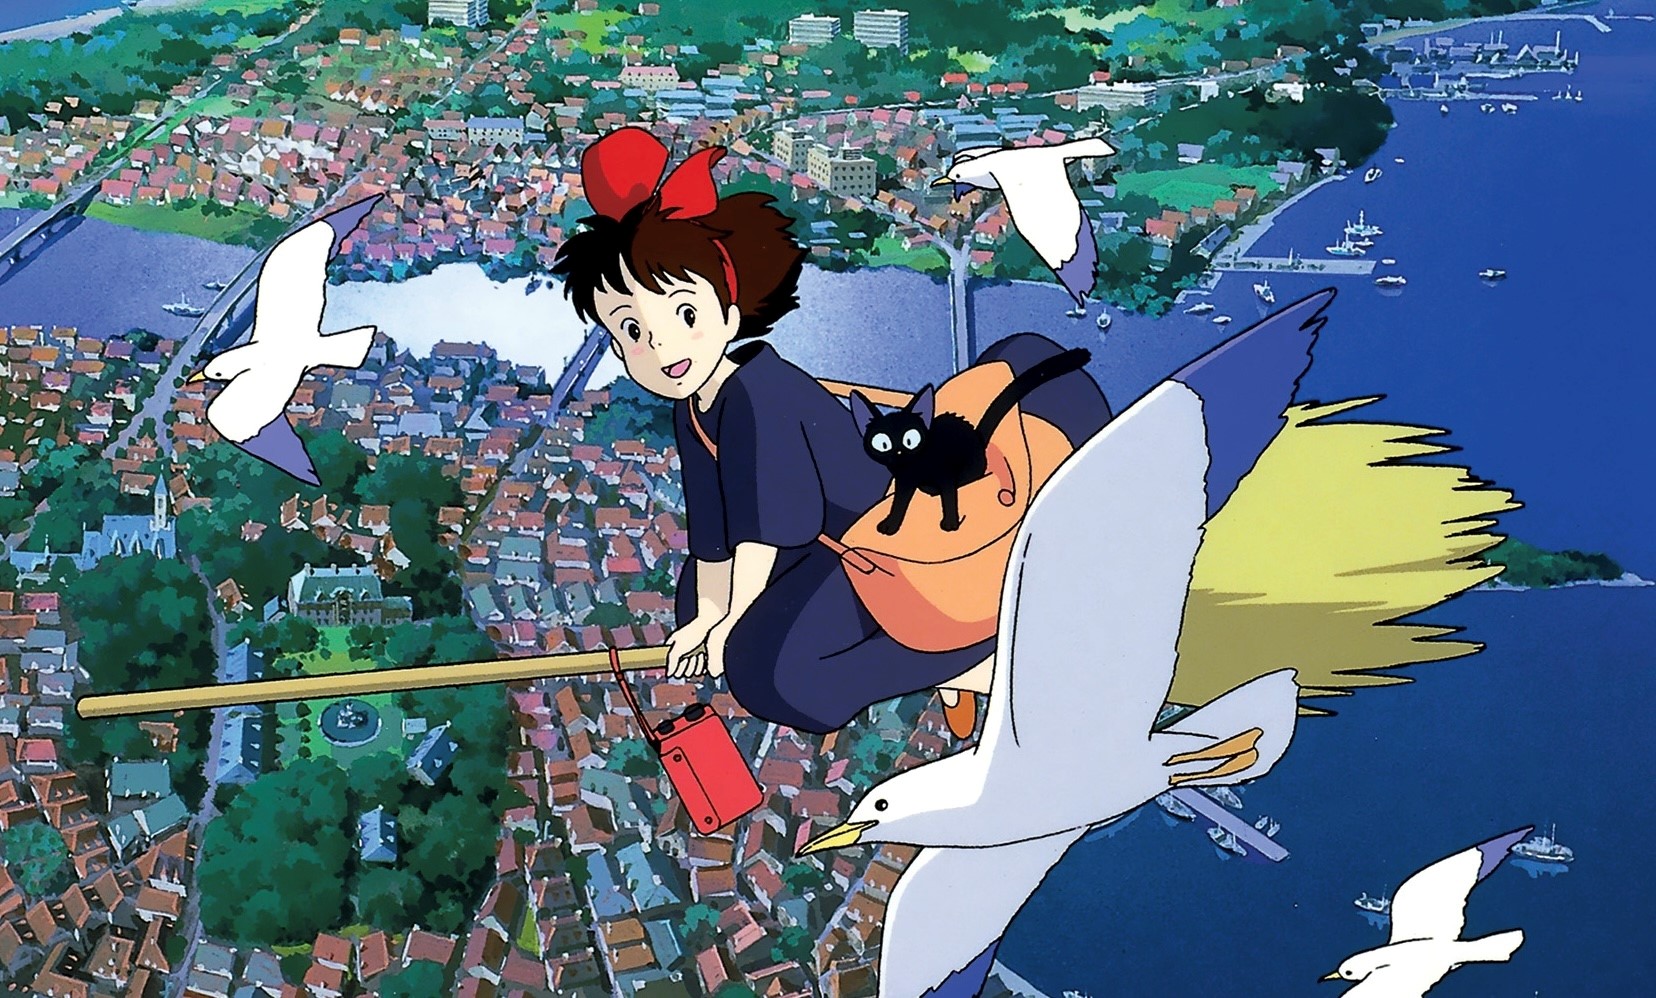 Kiki Jiji Ghibli